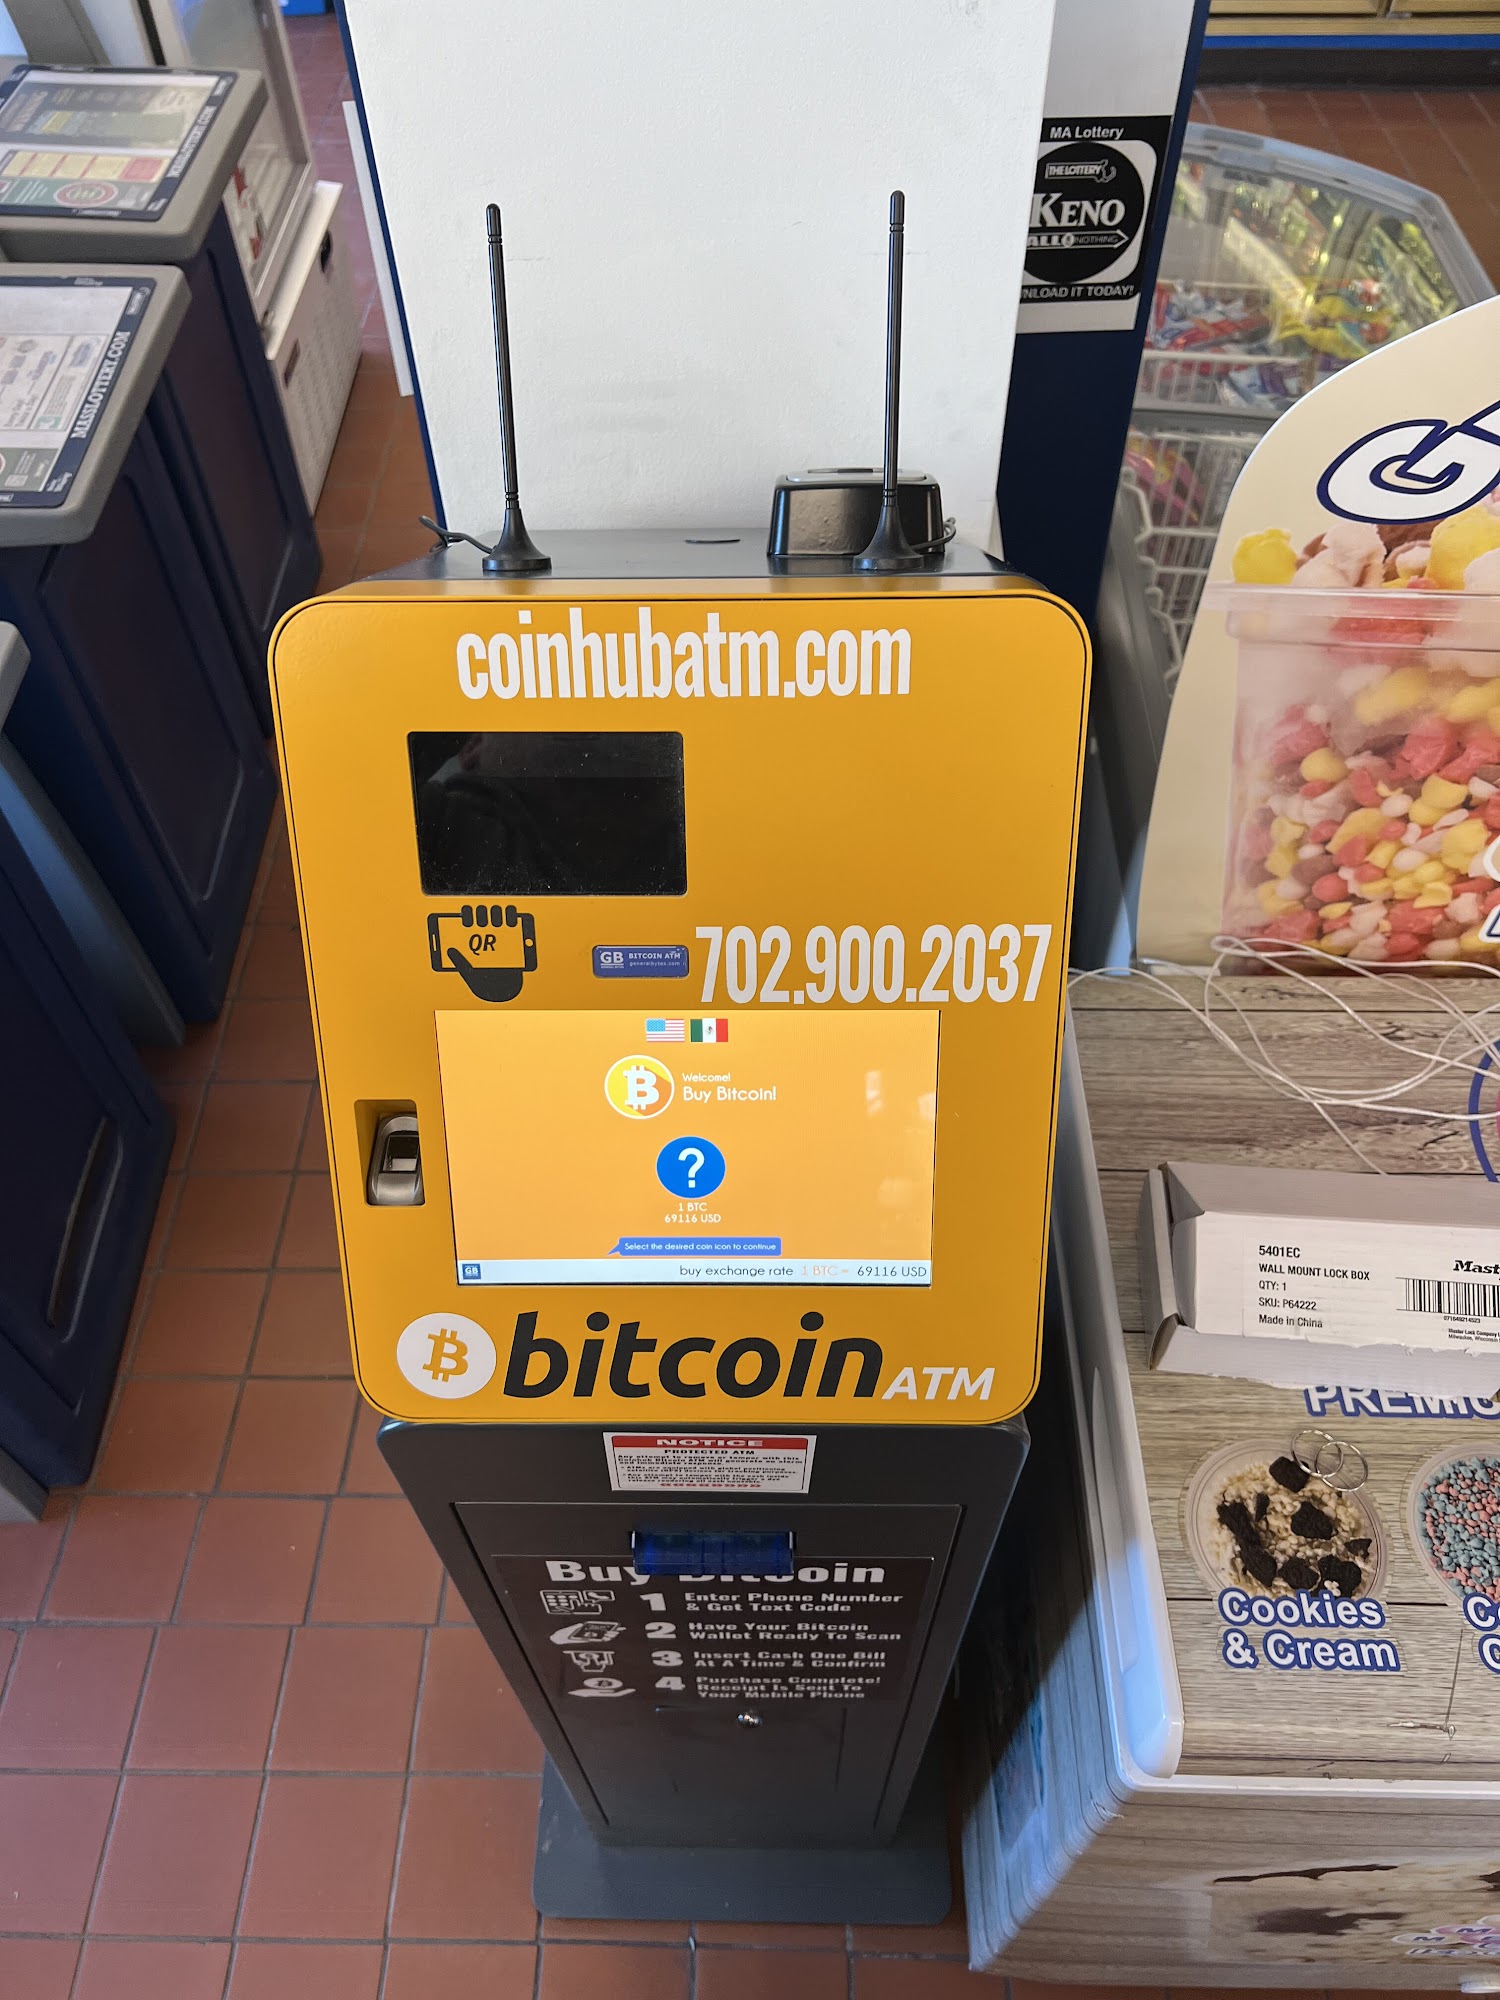 Bitcoin ATM Bellingham - Coinhub